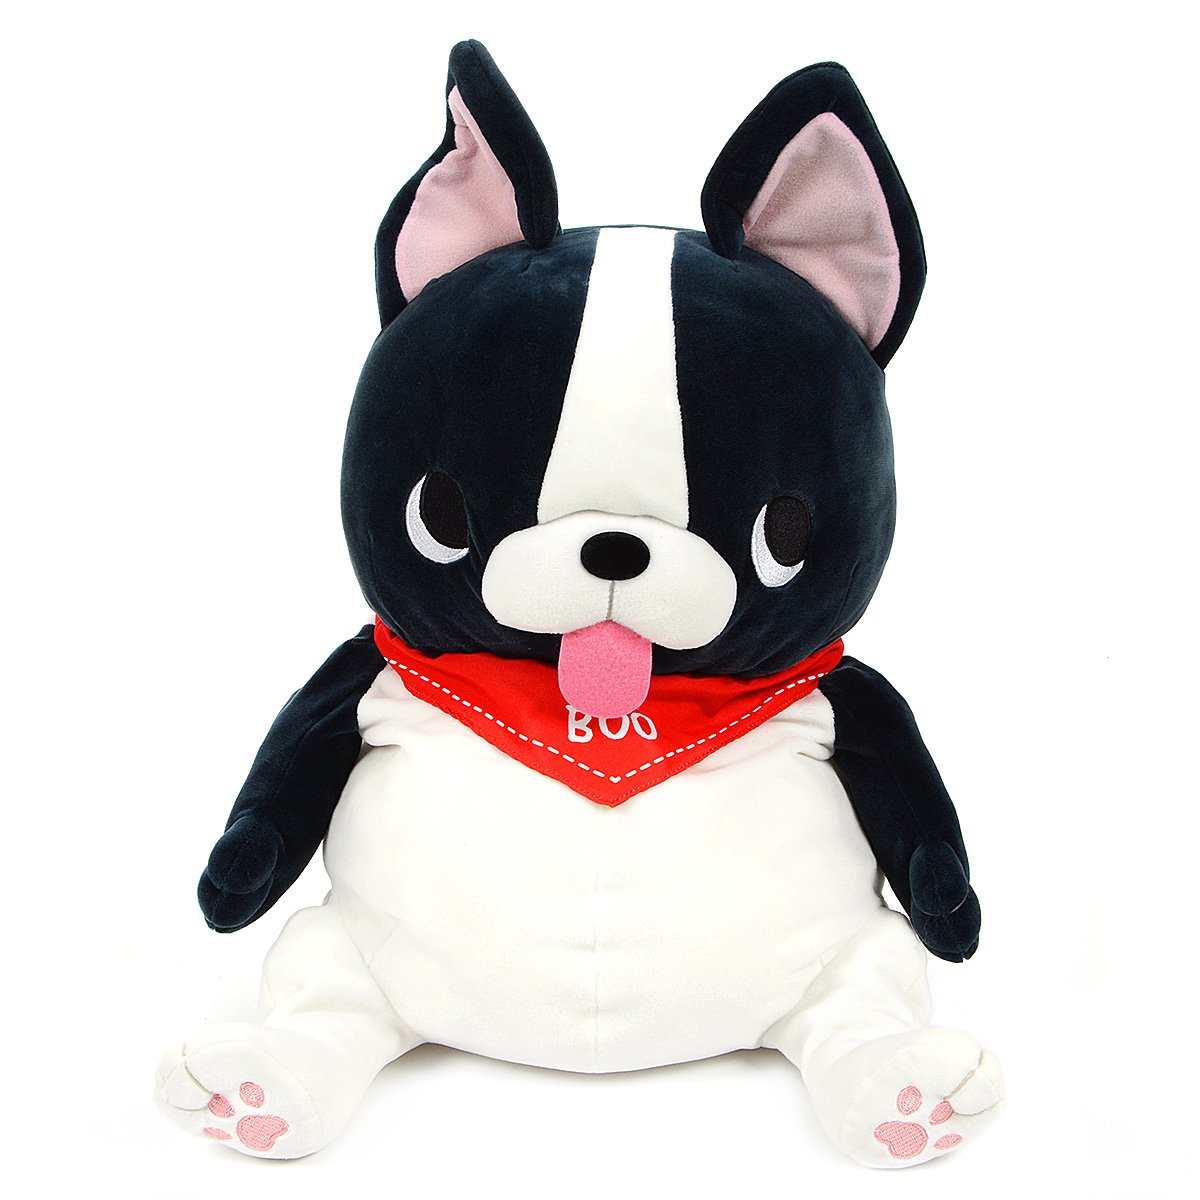 Amuse Plush Doll Pug Buruburu Boo! Boo Black / White, 17 Inches Big Size